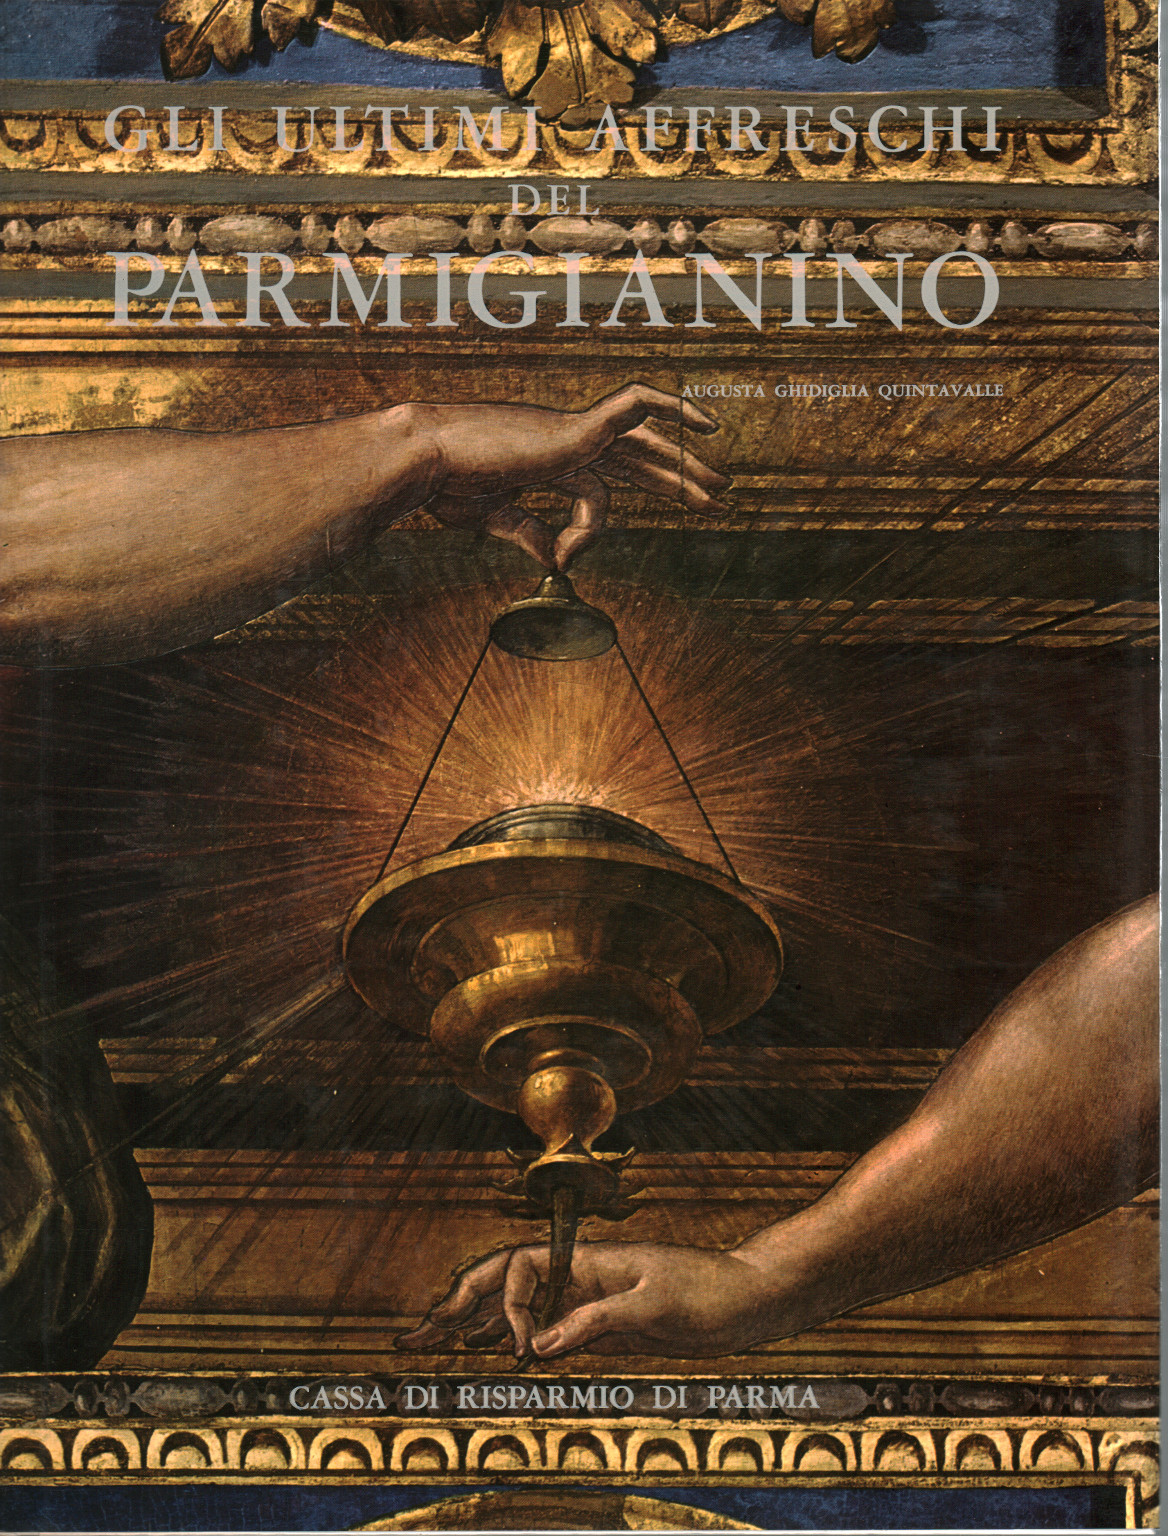 Gli ultimi affreschi del Parmigianino, Augusta Ghidiglia Quintavalle